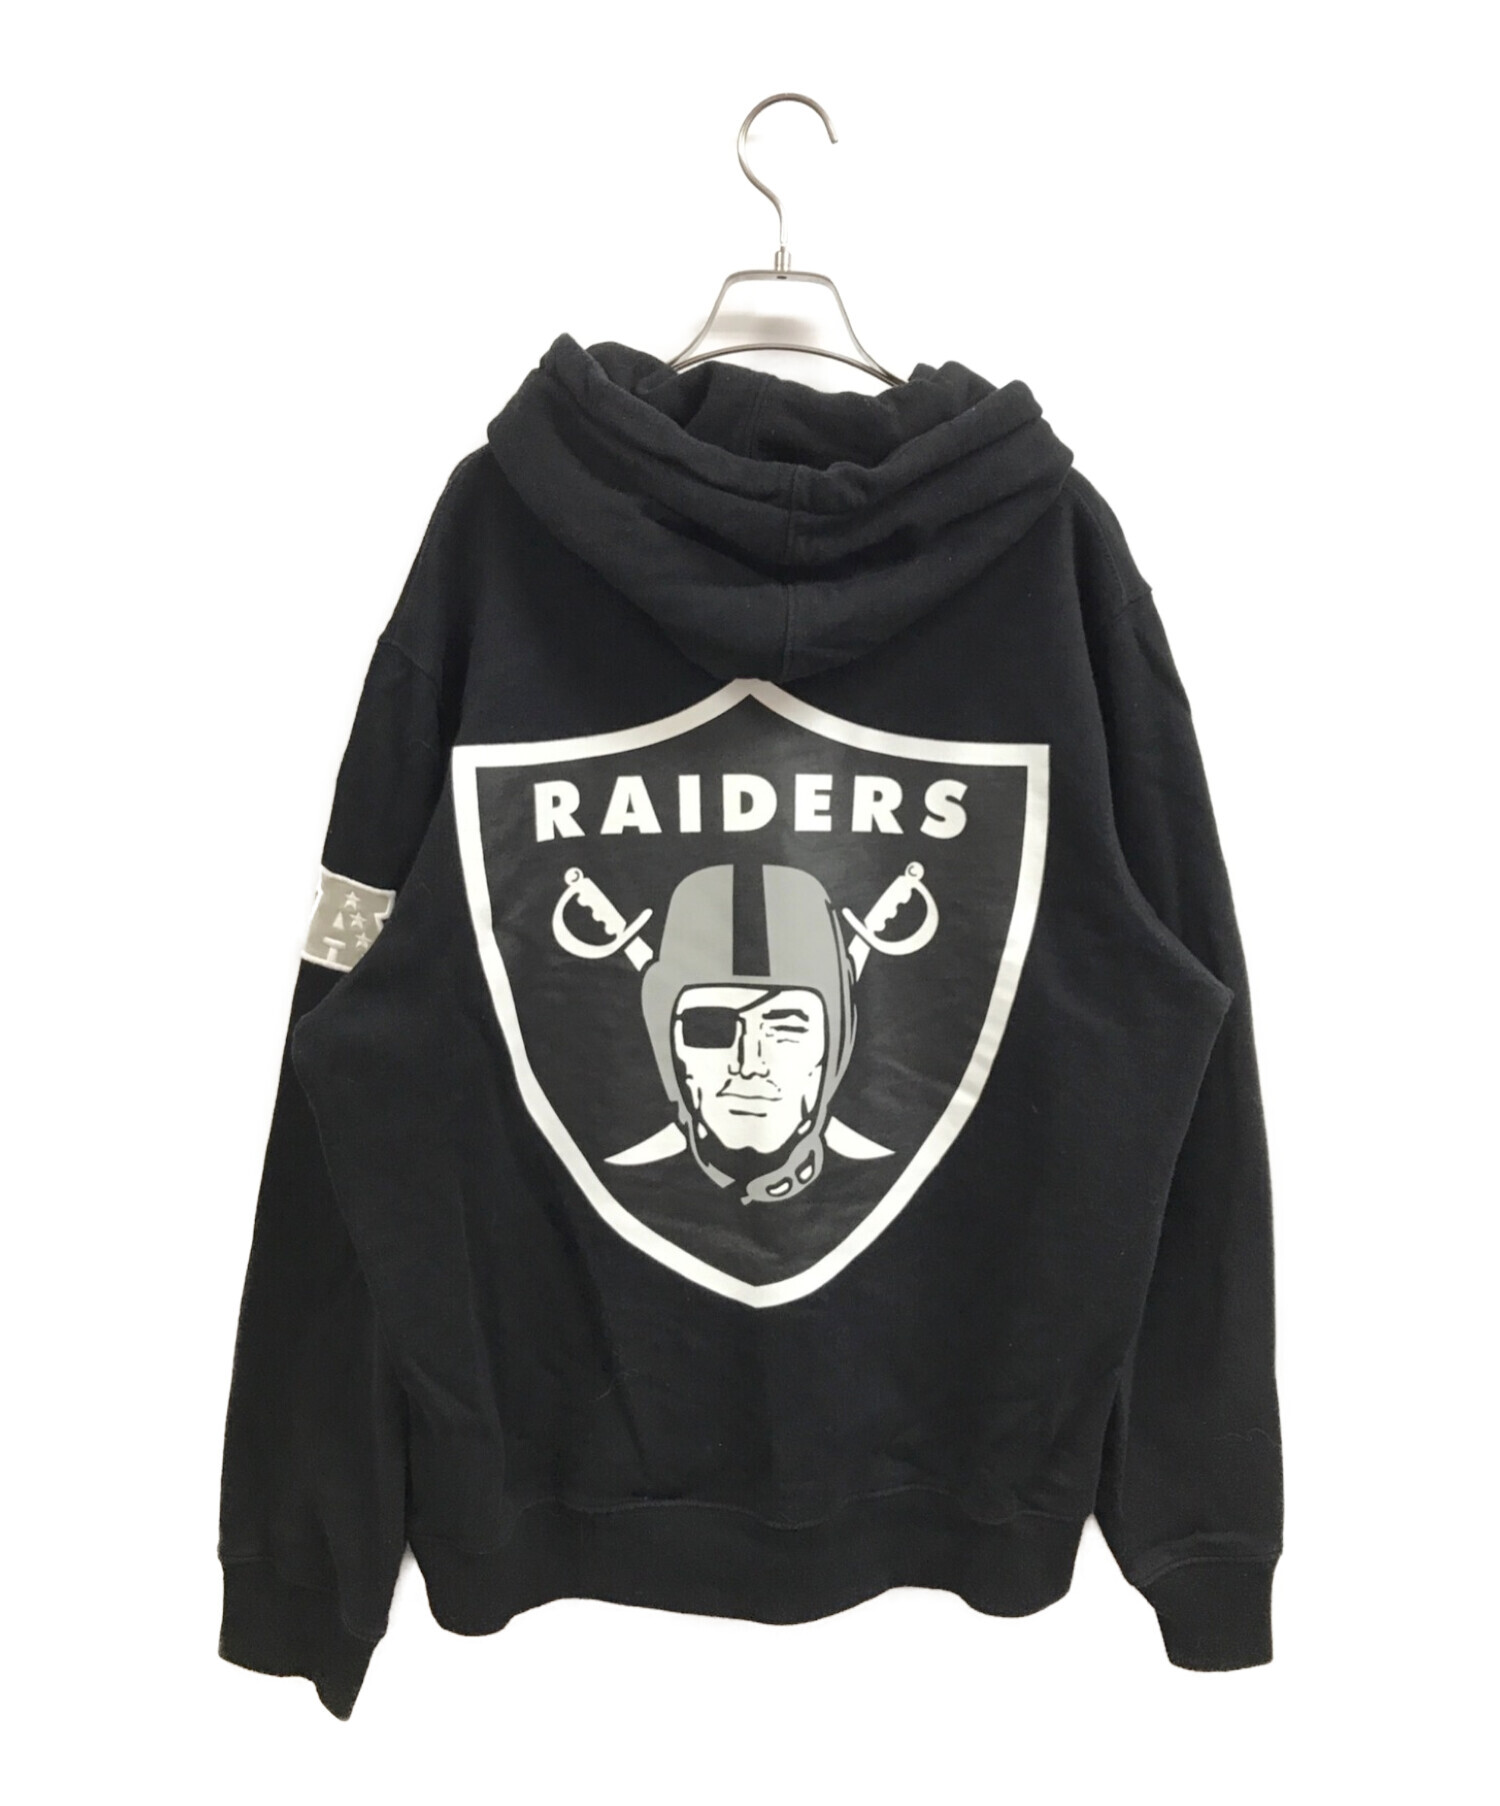 Mサイズ Supreme Raiders Hooded Sweatshirt